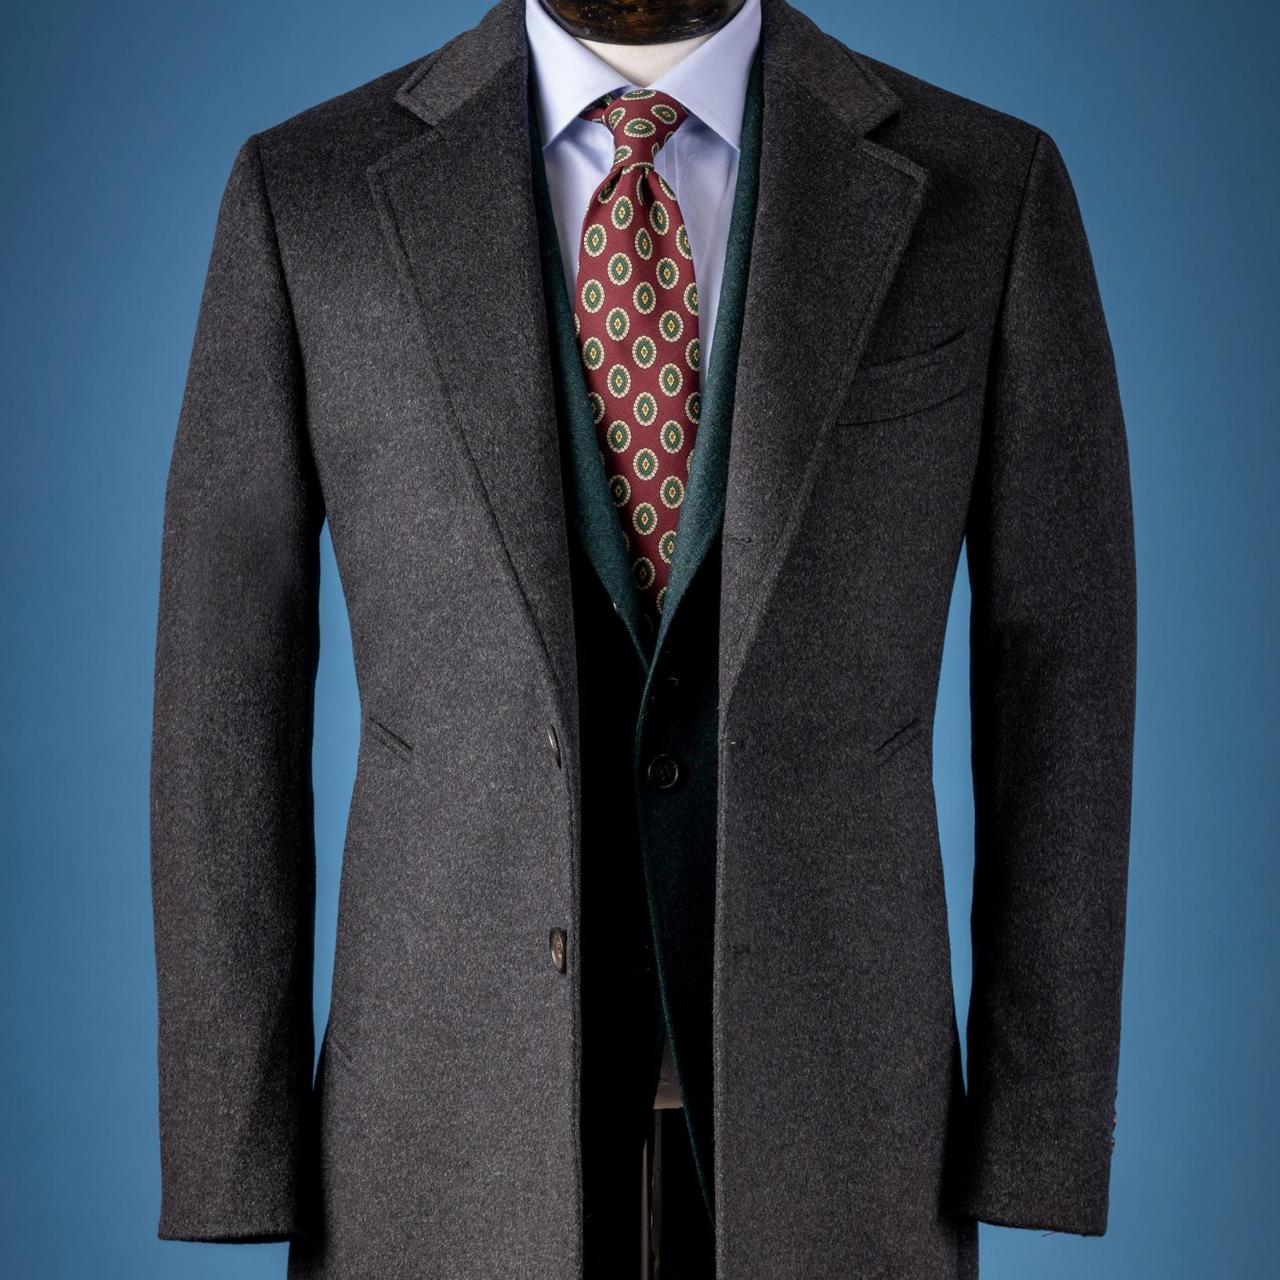 selling this topcoat / overcoat from Spier & Mackay,... - Depop